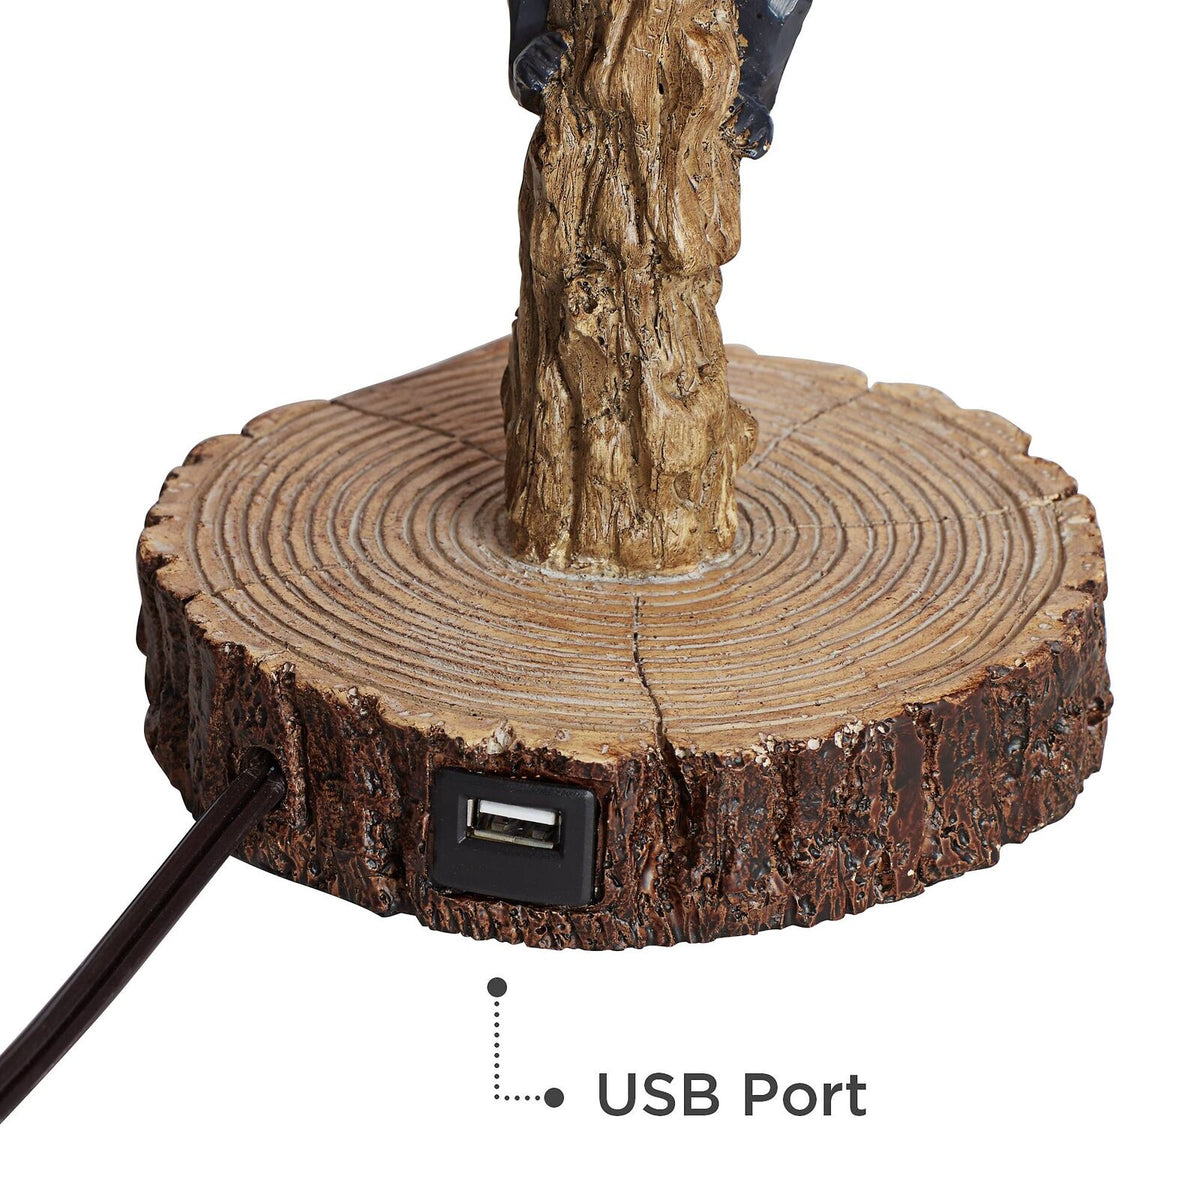 2 Pcs. Rustic Table Lamps W/ Climbing Bear Design & USB Charging Ports